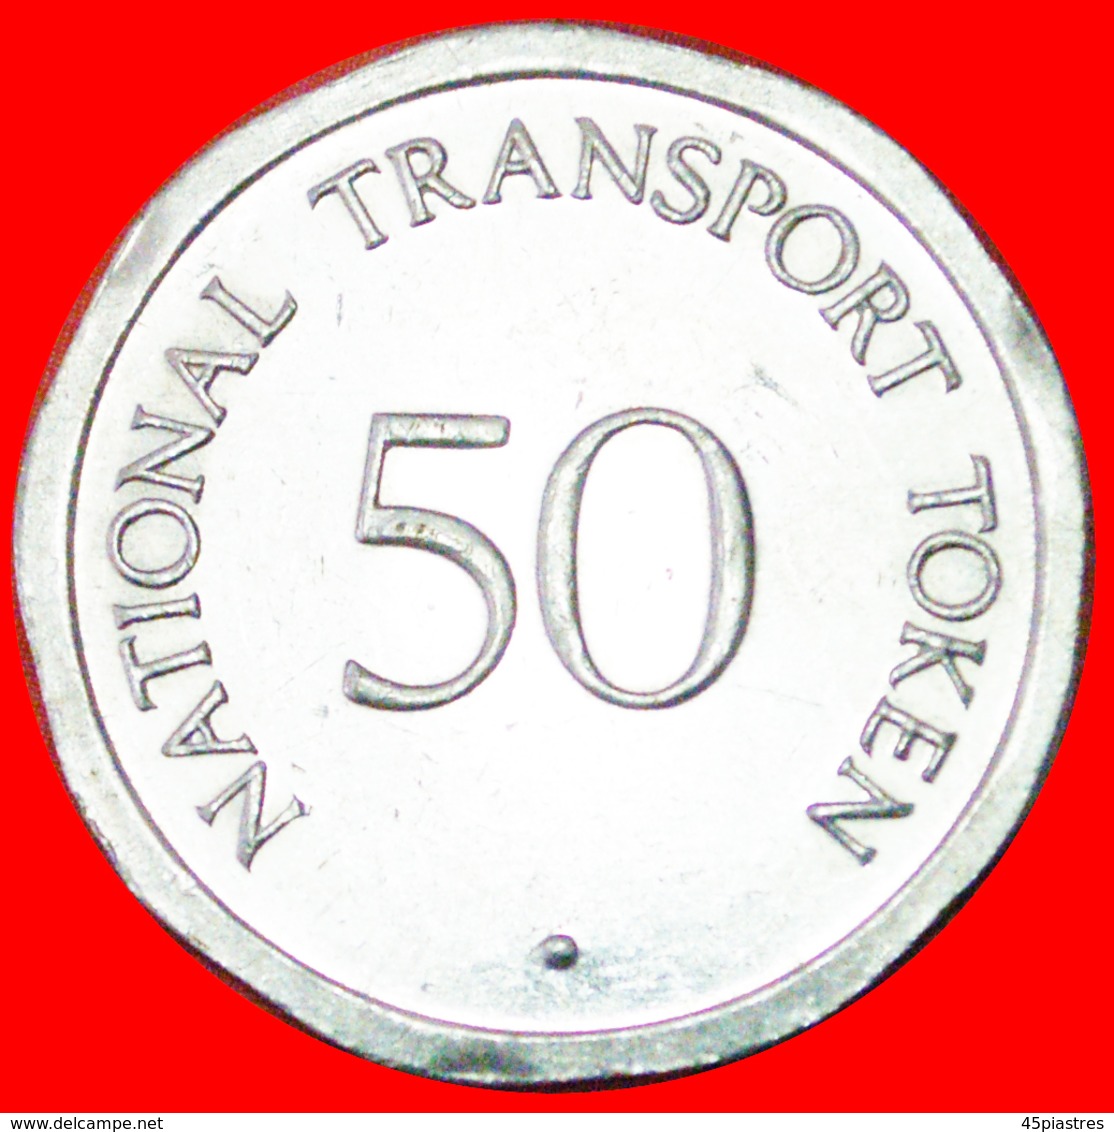 · EDINBURGH CASTLE: GREAT BRITAIN ★ 50 PENCE NATIONAL TRANSPORT TOKEN MINT LUSTER! LOW START ★ NO RESERVE! - Professionals/Firms